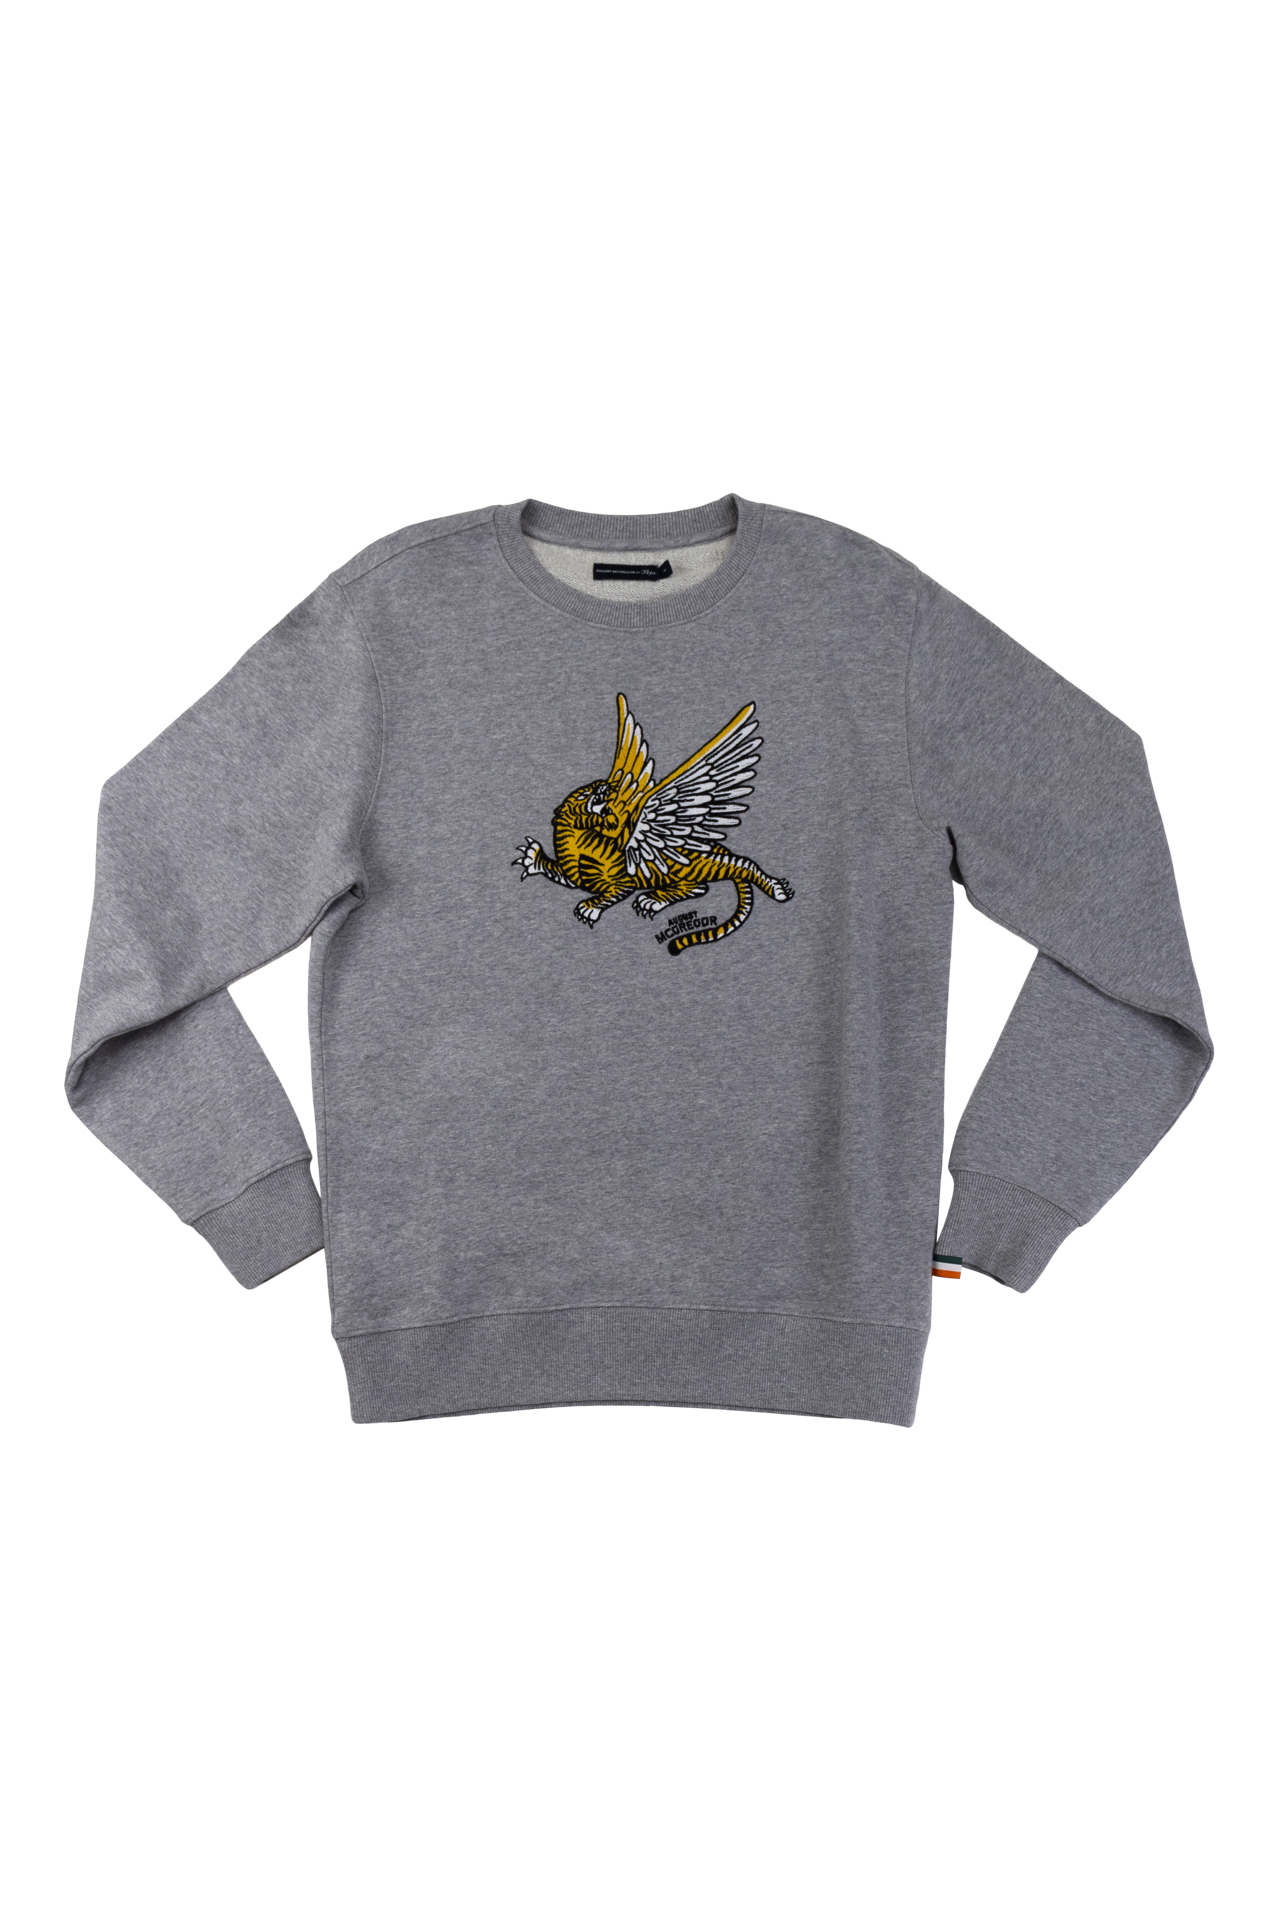 August McGregor  AM X PRPS Crewneck Embroidered Flying Tiger Sweatshirt in  Grey